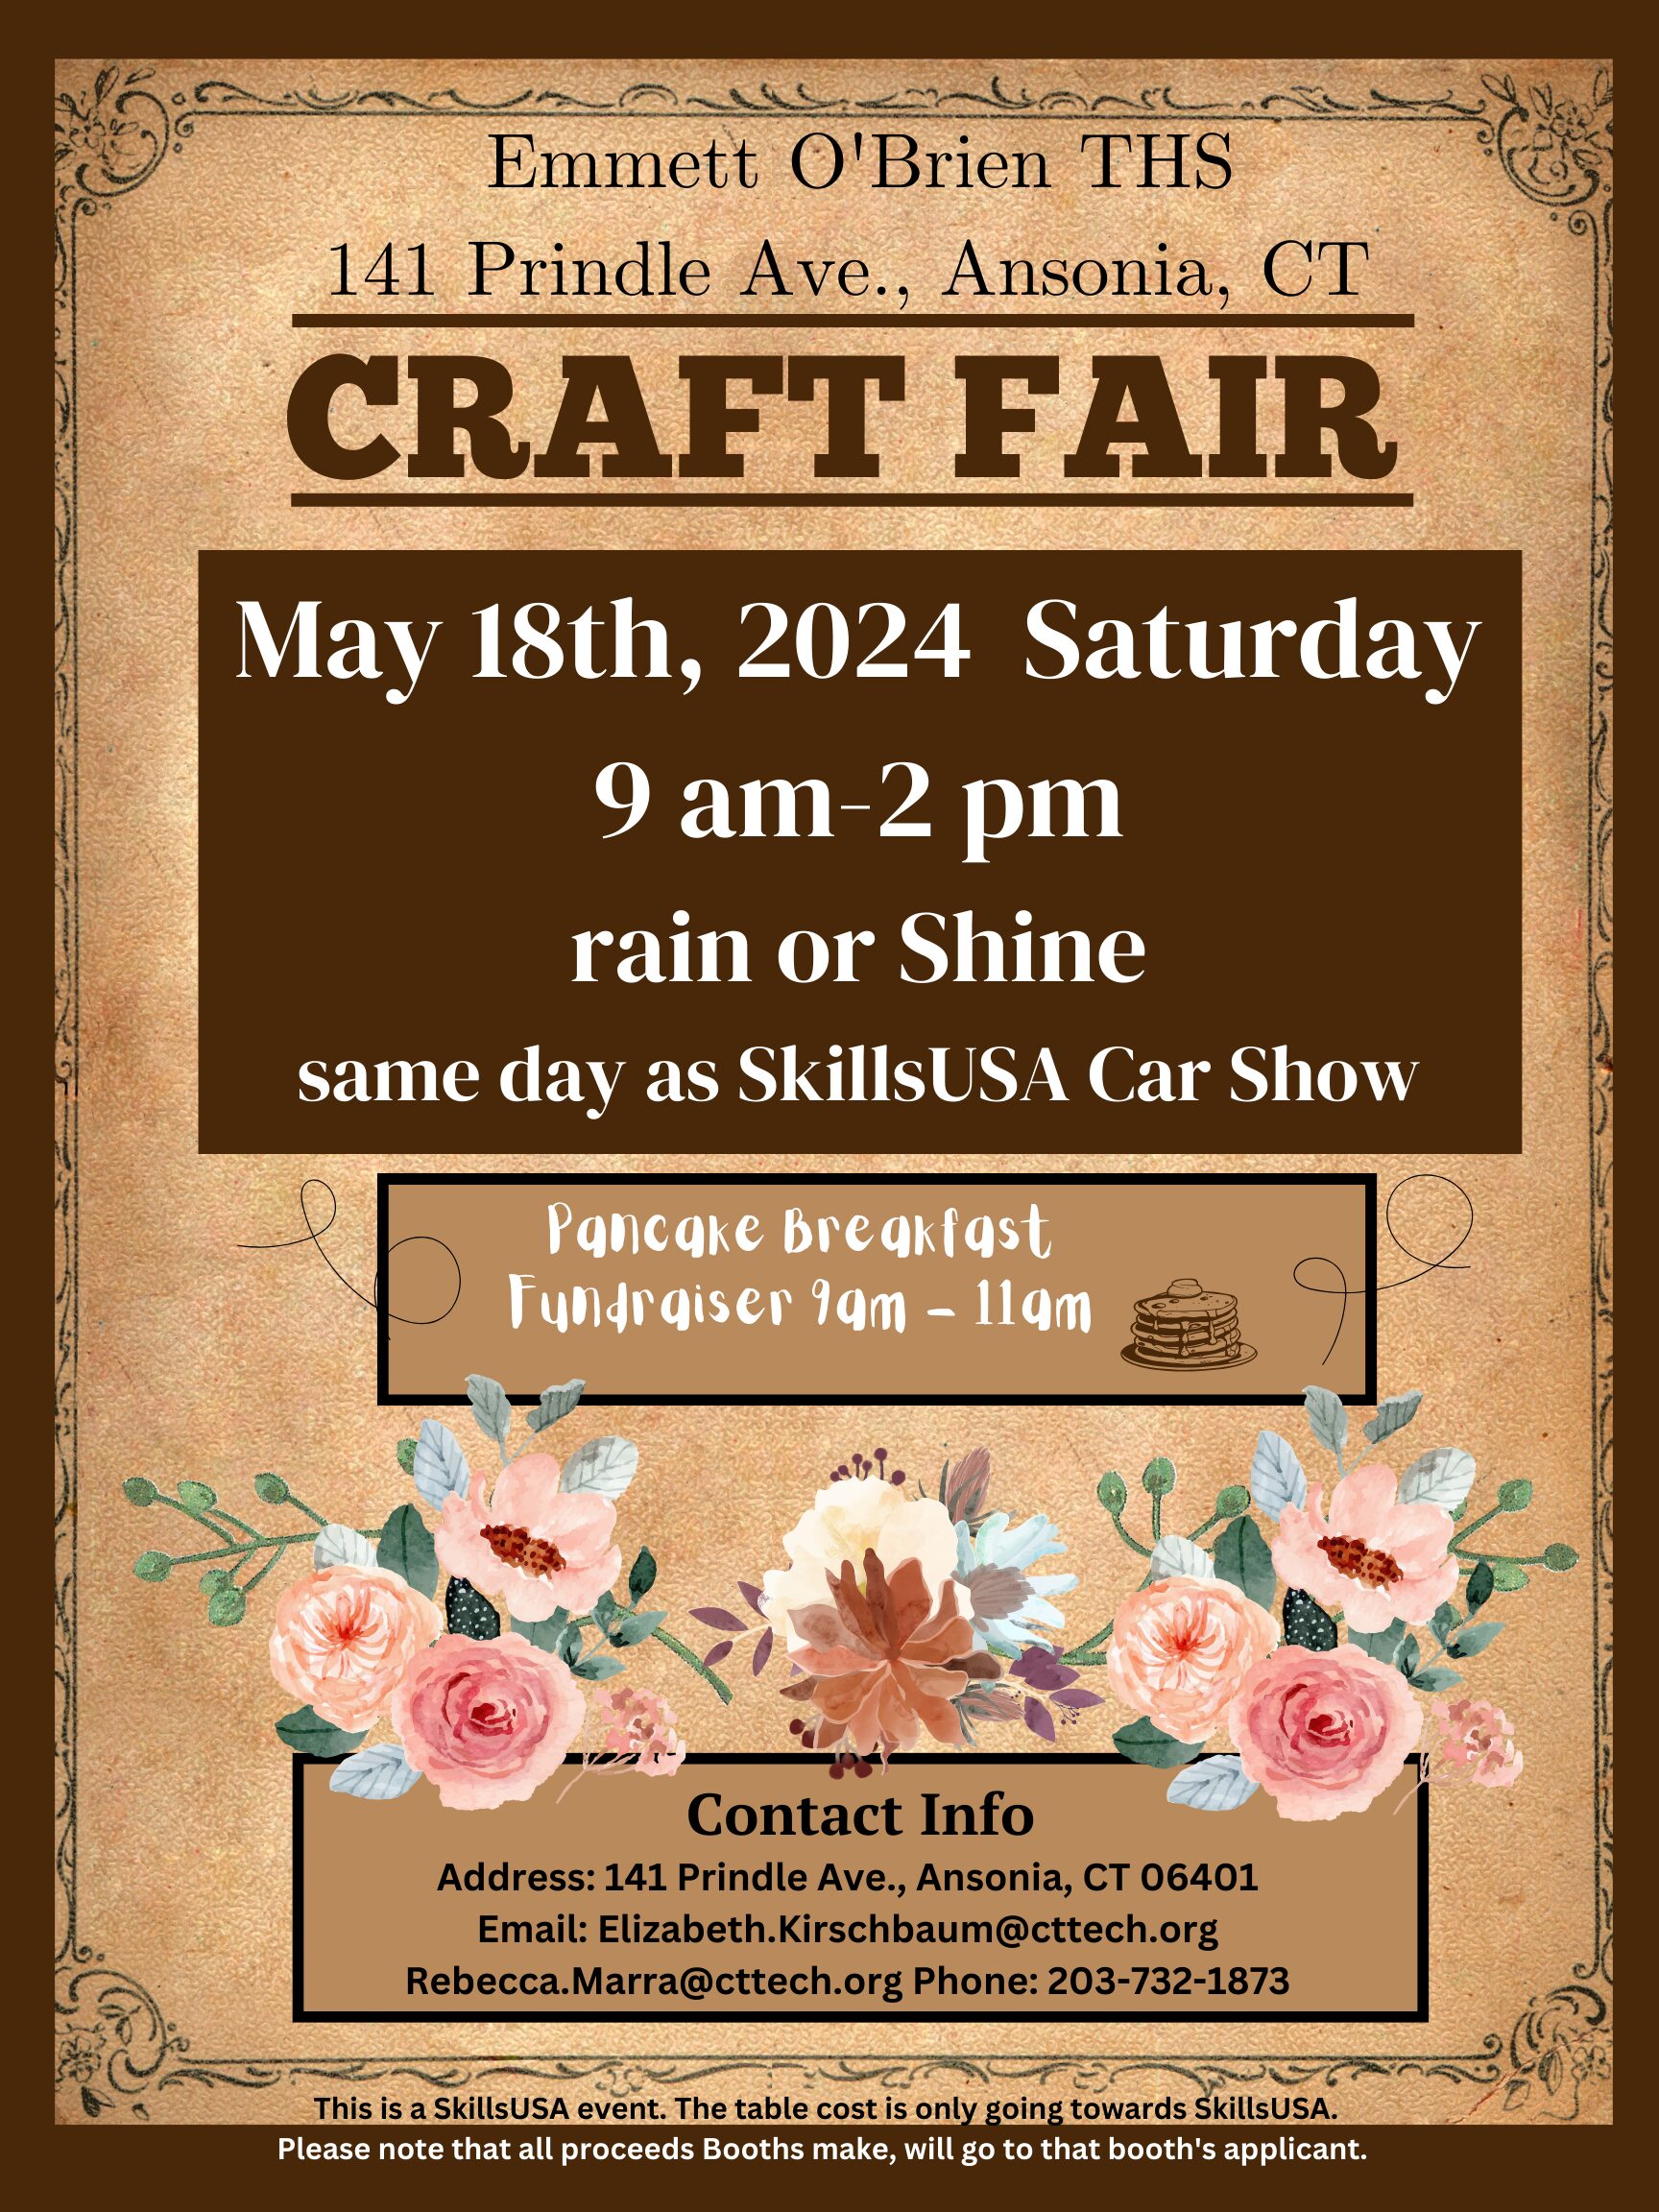 SkillsUSA sponsored craft fair on May 18, 2024 from 9-2 at EOB.